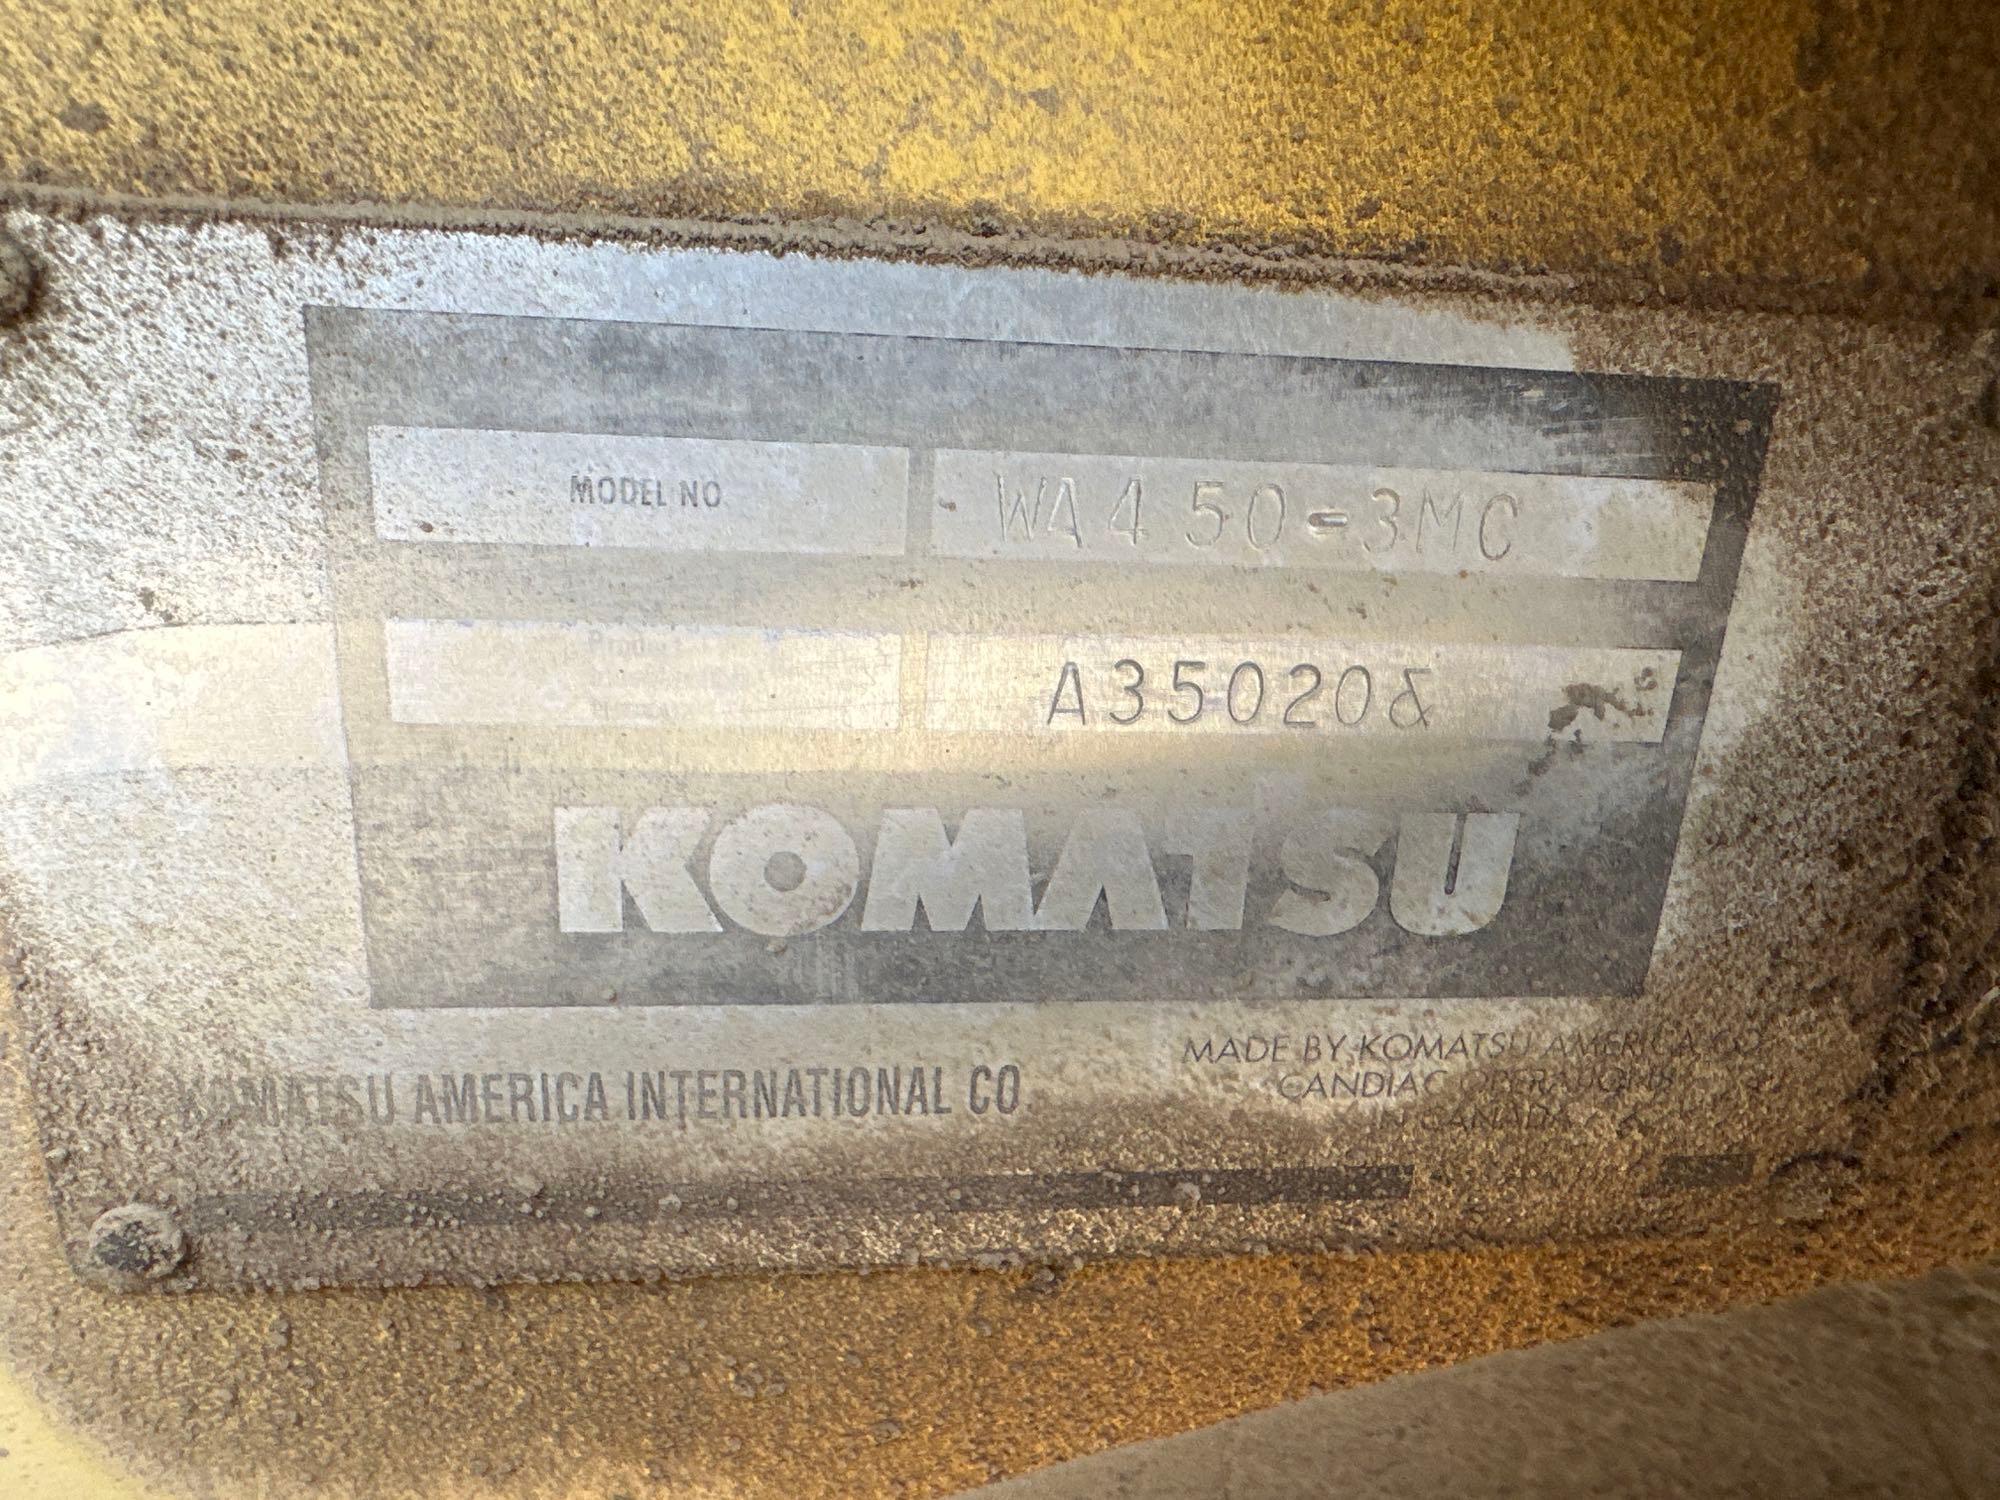 2001 Komatsu WA450-3MC Wheel Loader